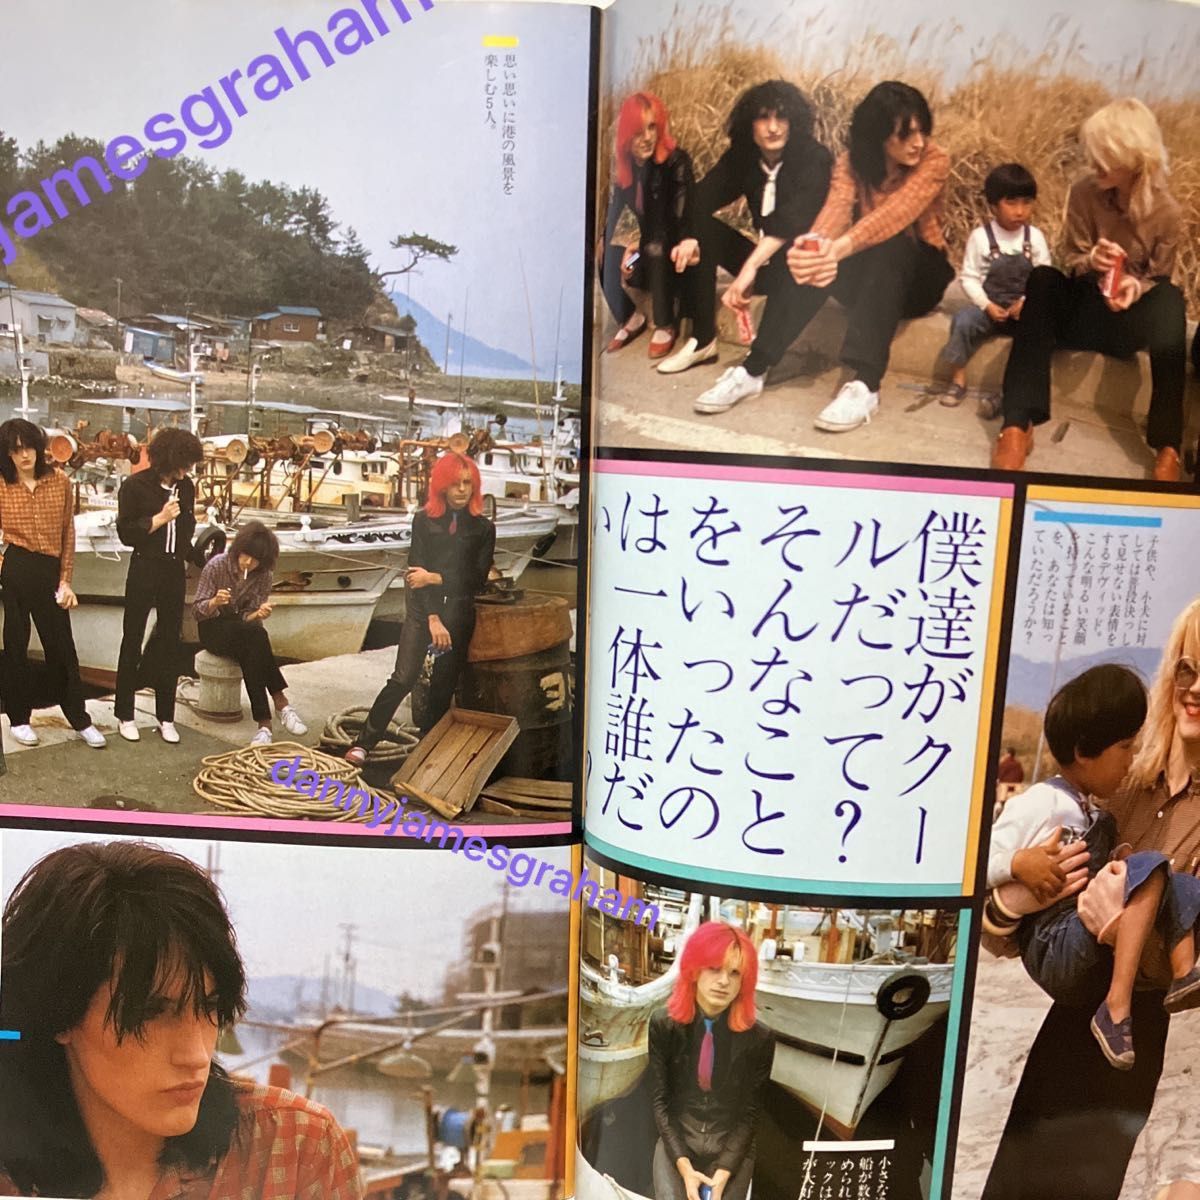 JAPAN イン 日本 ポスターつき MUSIC LIFE 増刊号 付録 デビットシルビアン ミックカーン イギリス バンド 洋楽